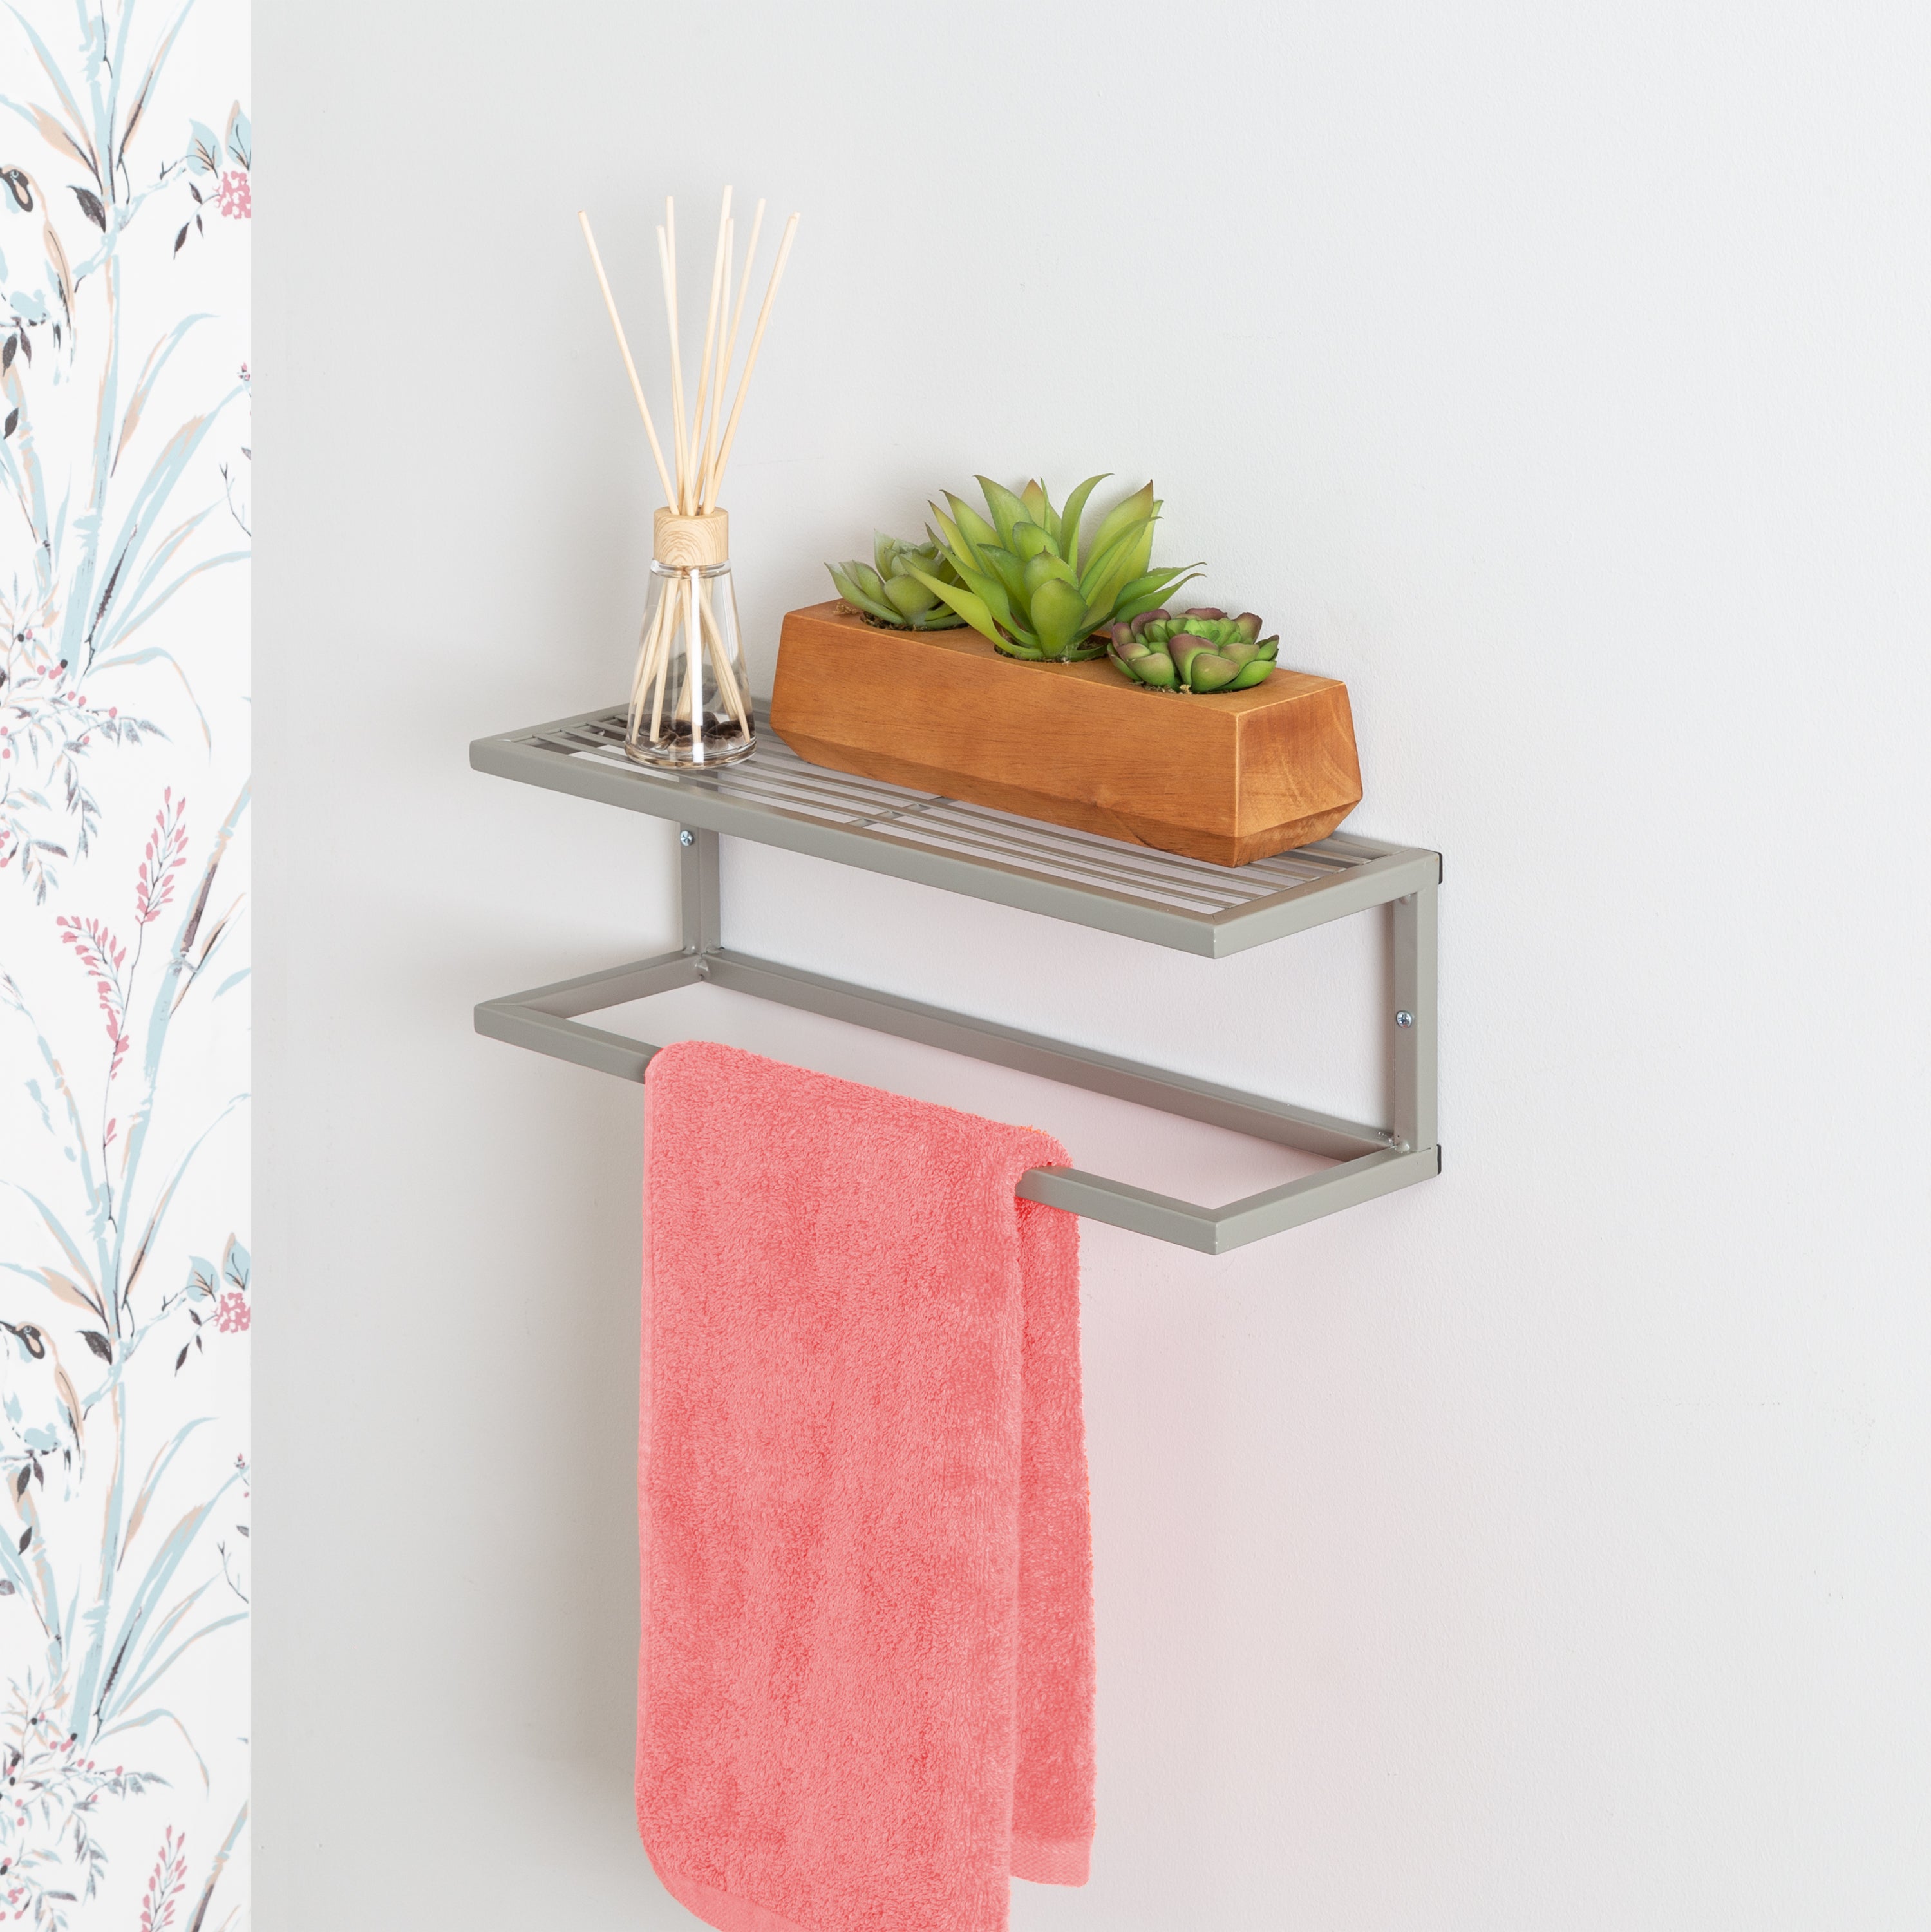 2 Tier Wall Mounting Chrome Plated Steel Bathroom Shelf with Towel